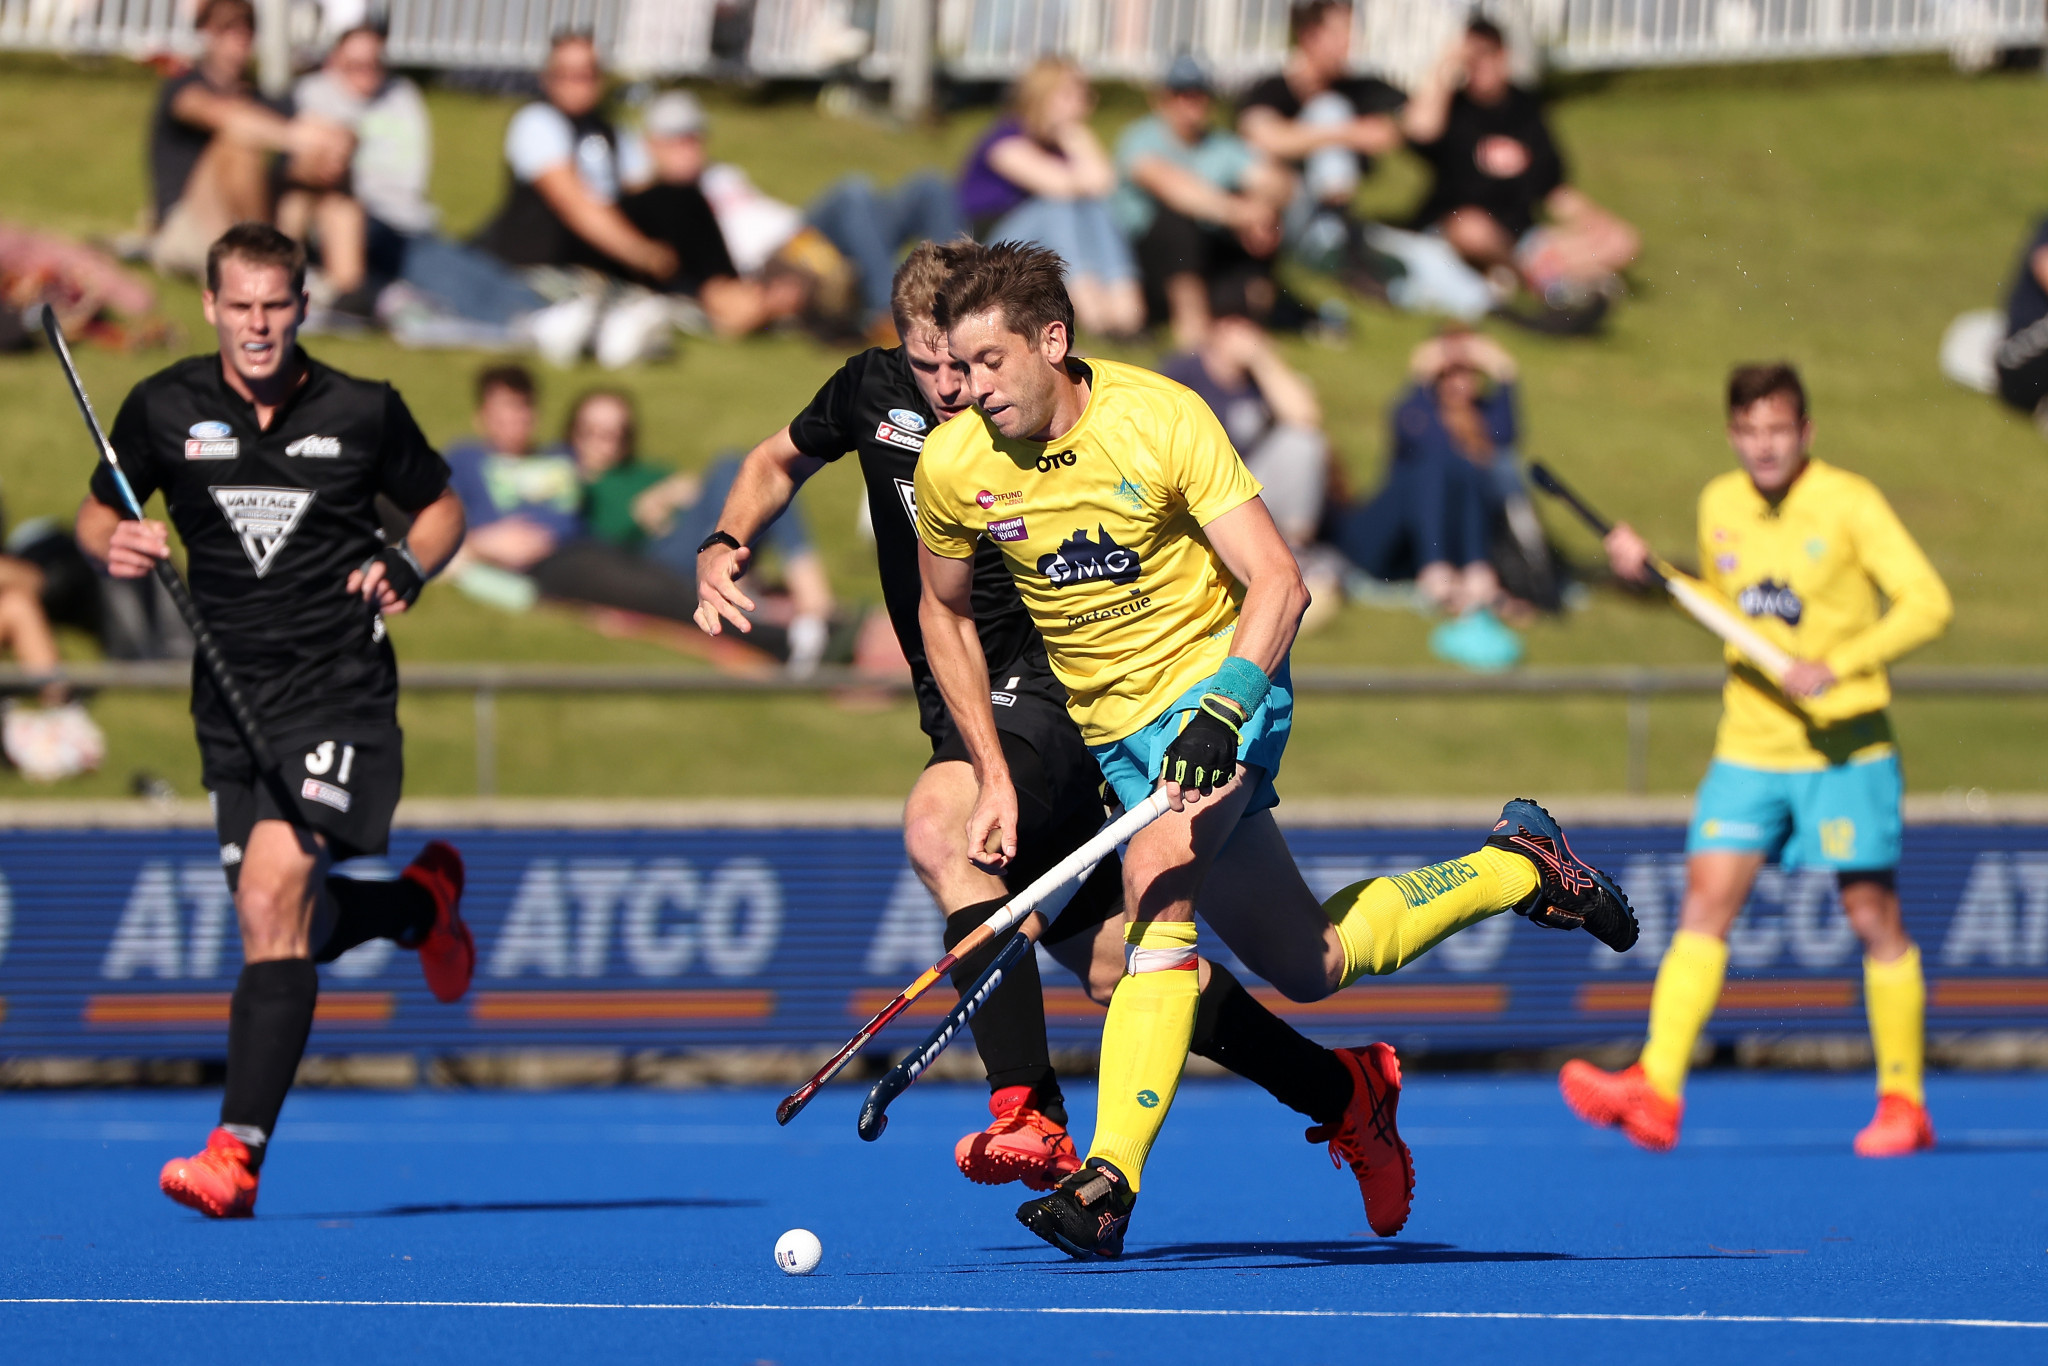 Australia won the men's match against New Zealand 7-3 Â© Getty Images